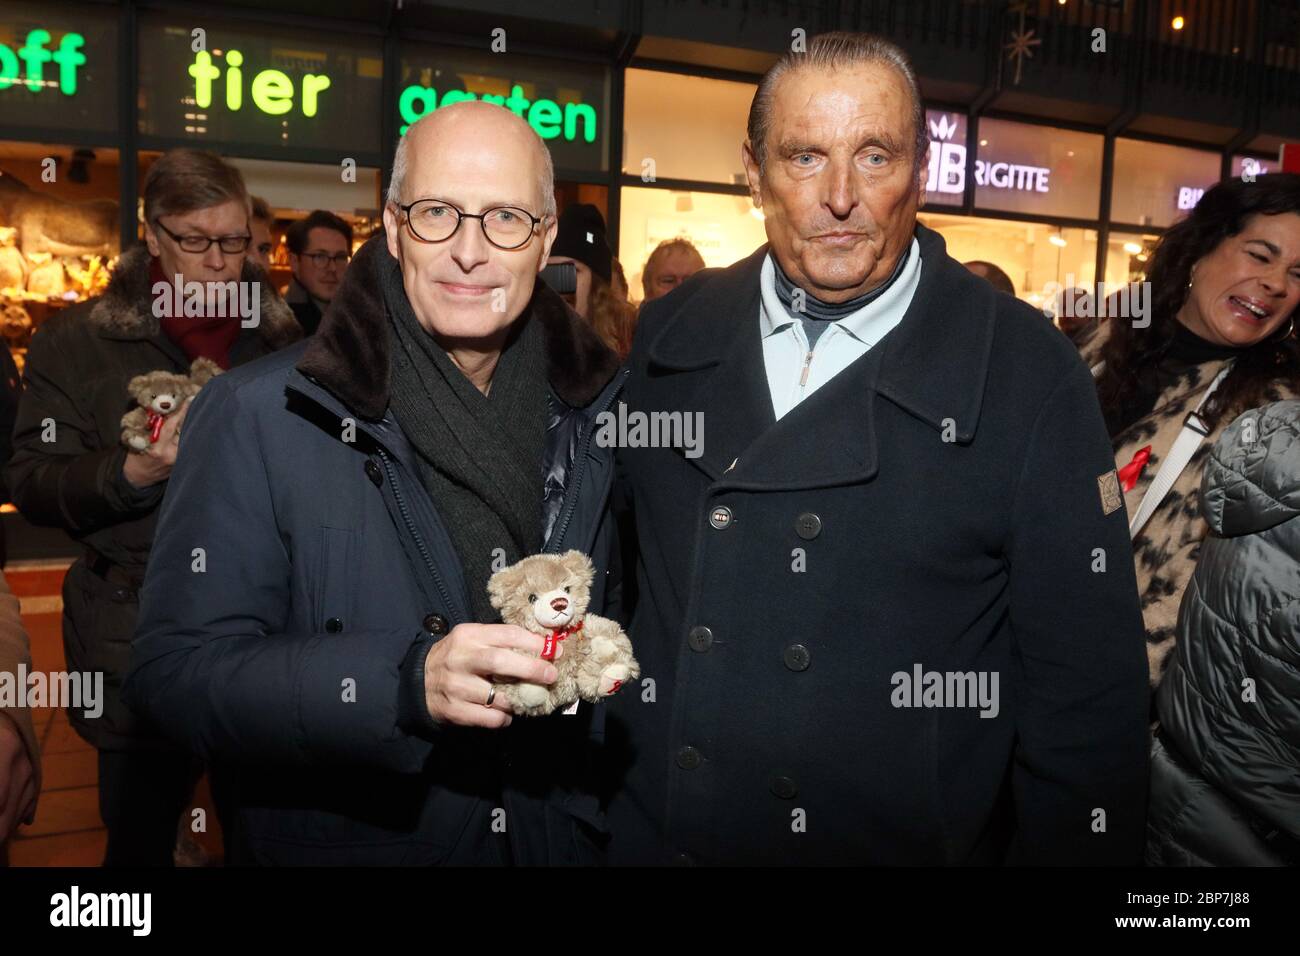 Peter Tschentscher,Dieter Bruhn (Eels Dieter),Beacon Teddy Action 2019,press launch,Wandelhalle Hamburg hautbahnhof,21.11.2019 Stock Photo